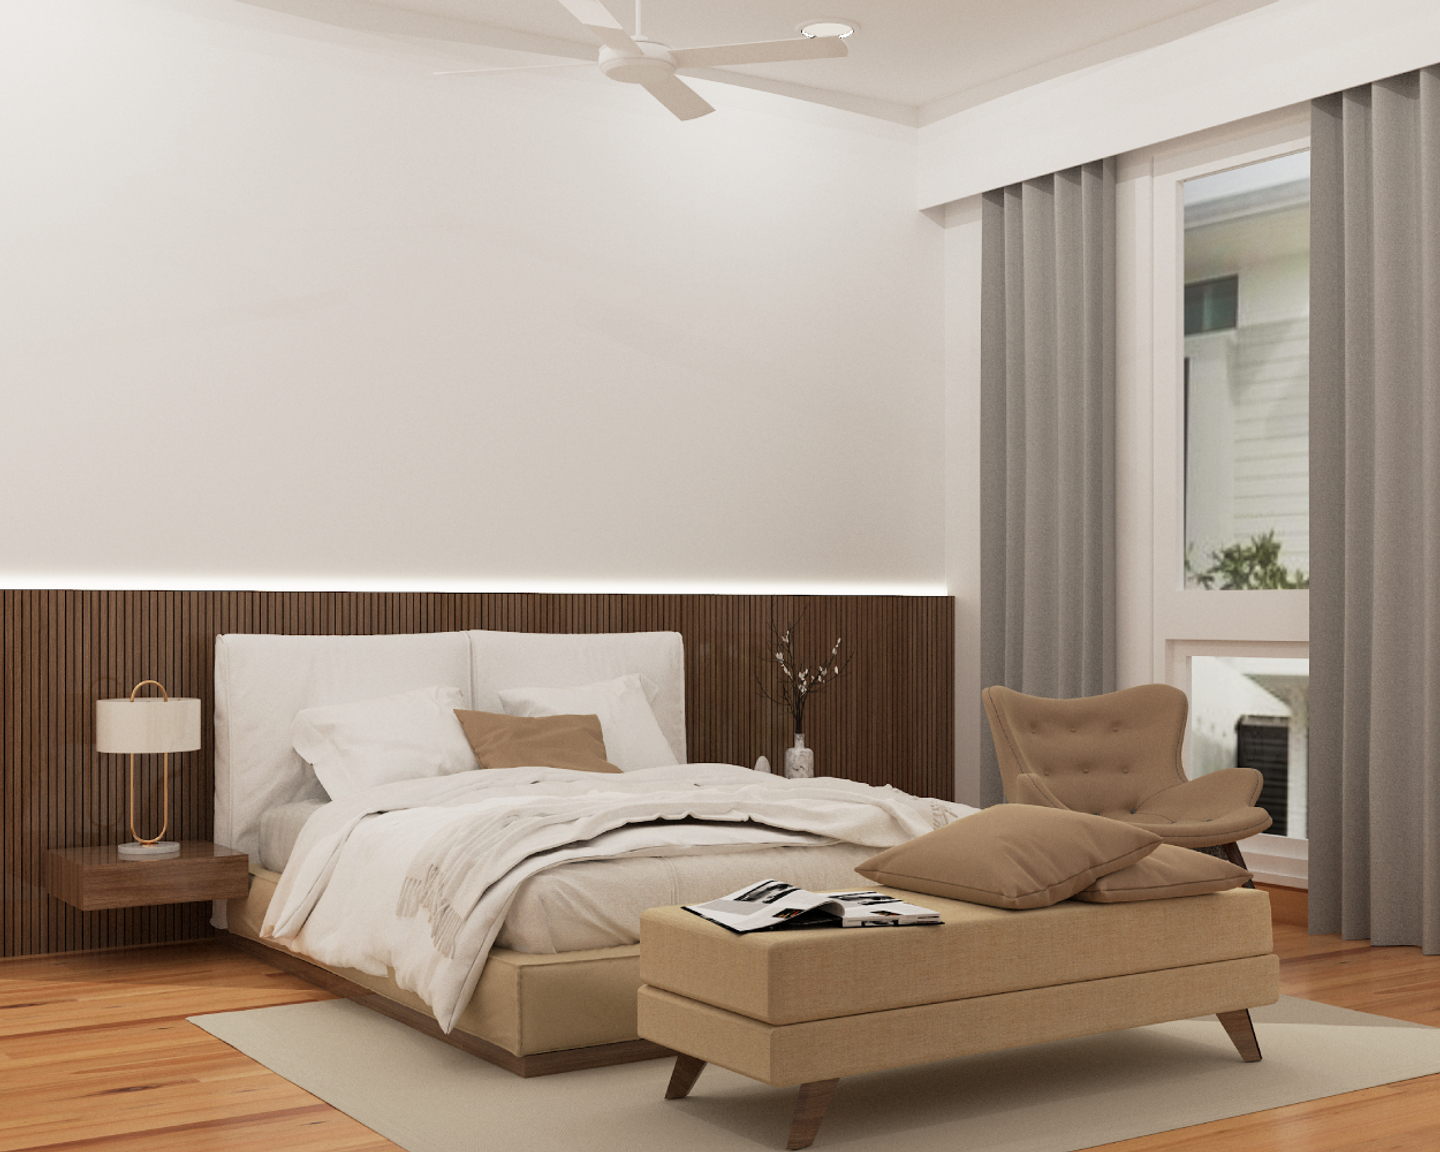 Bedroom Design With Wooden Furniture - Livspace